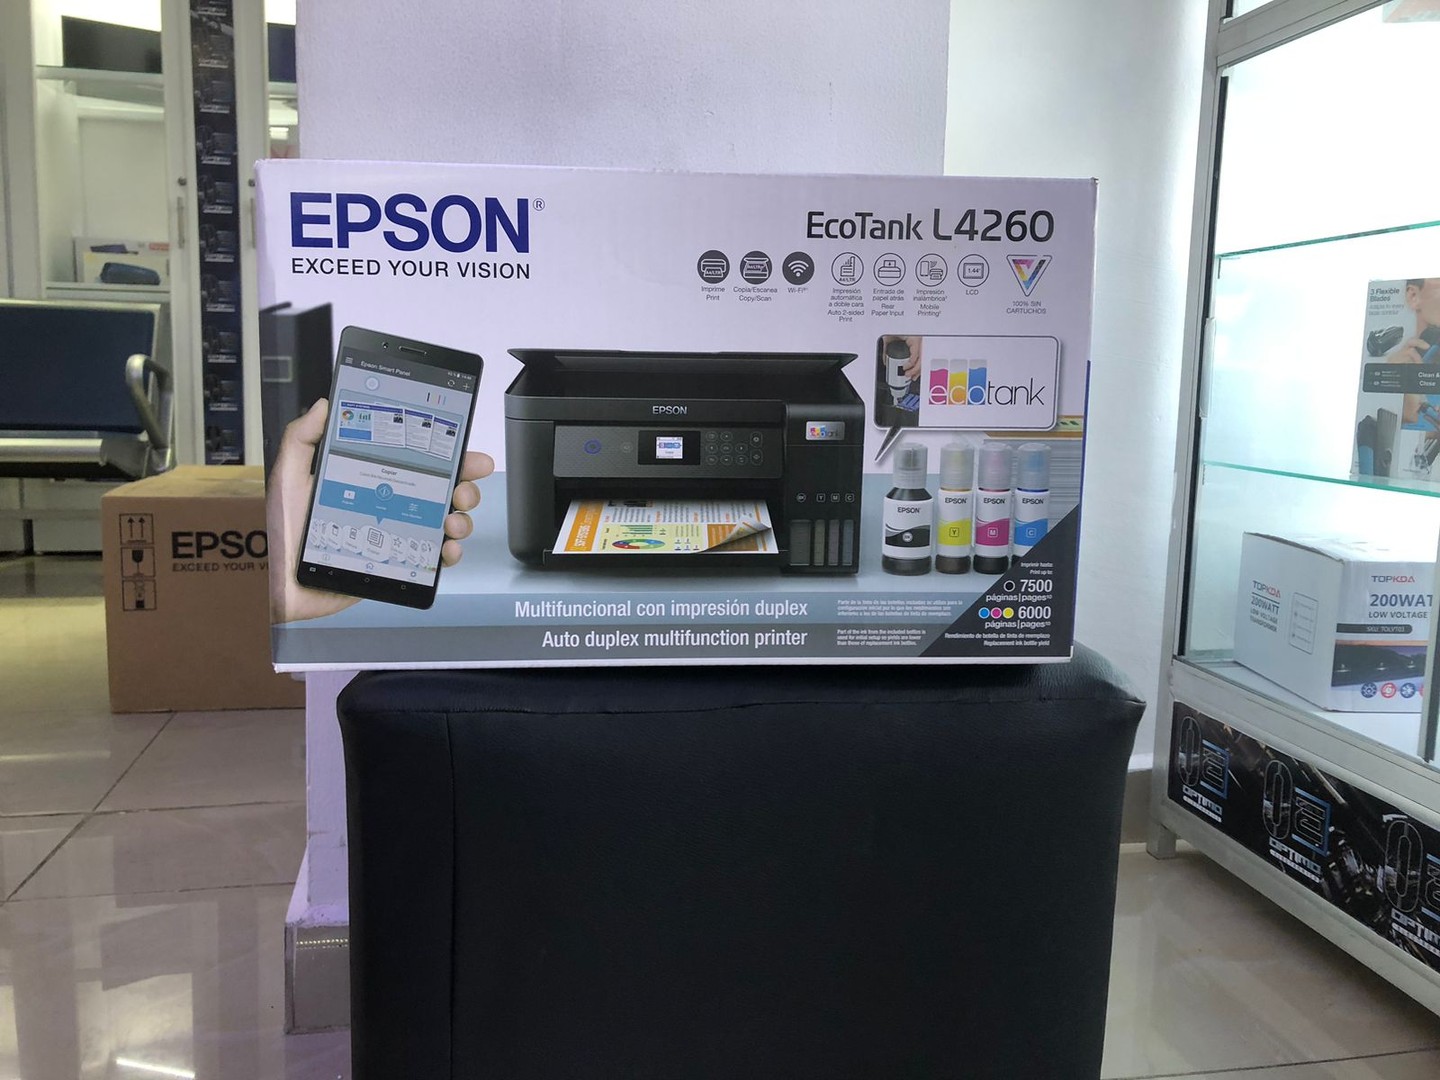 impresoras y scanners - Impresora Epson L4260 Multifuncion, Wifi y Cable USB - Pantalla LCD 5